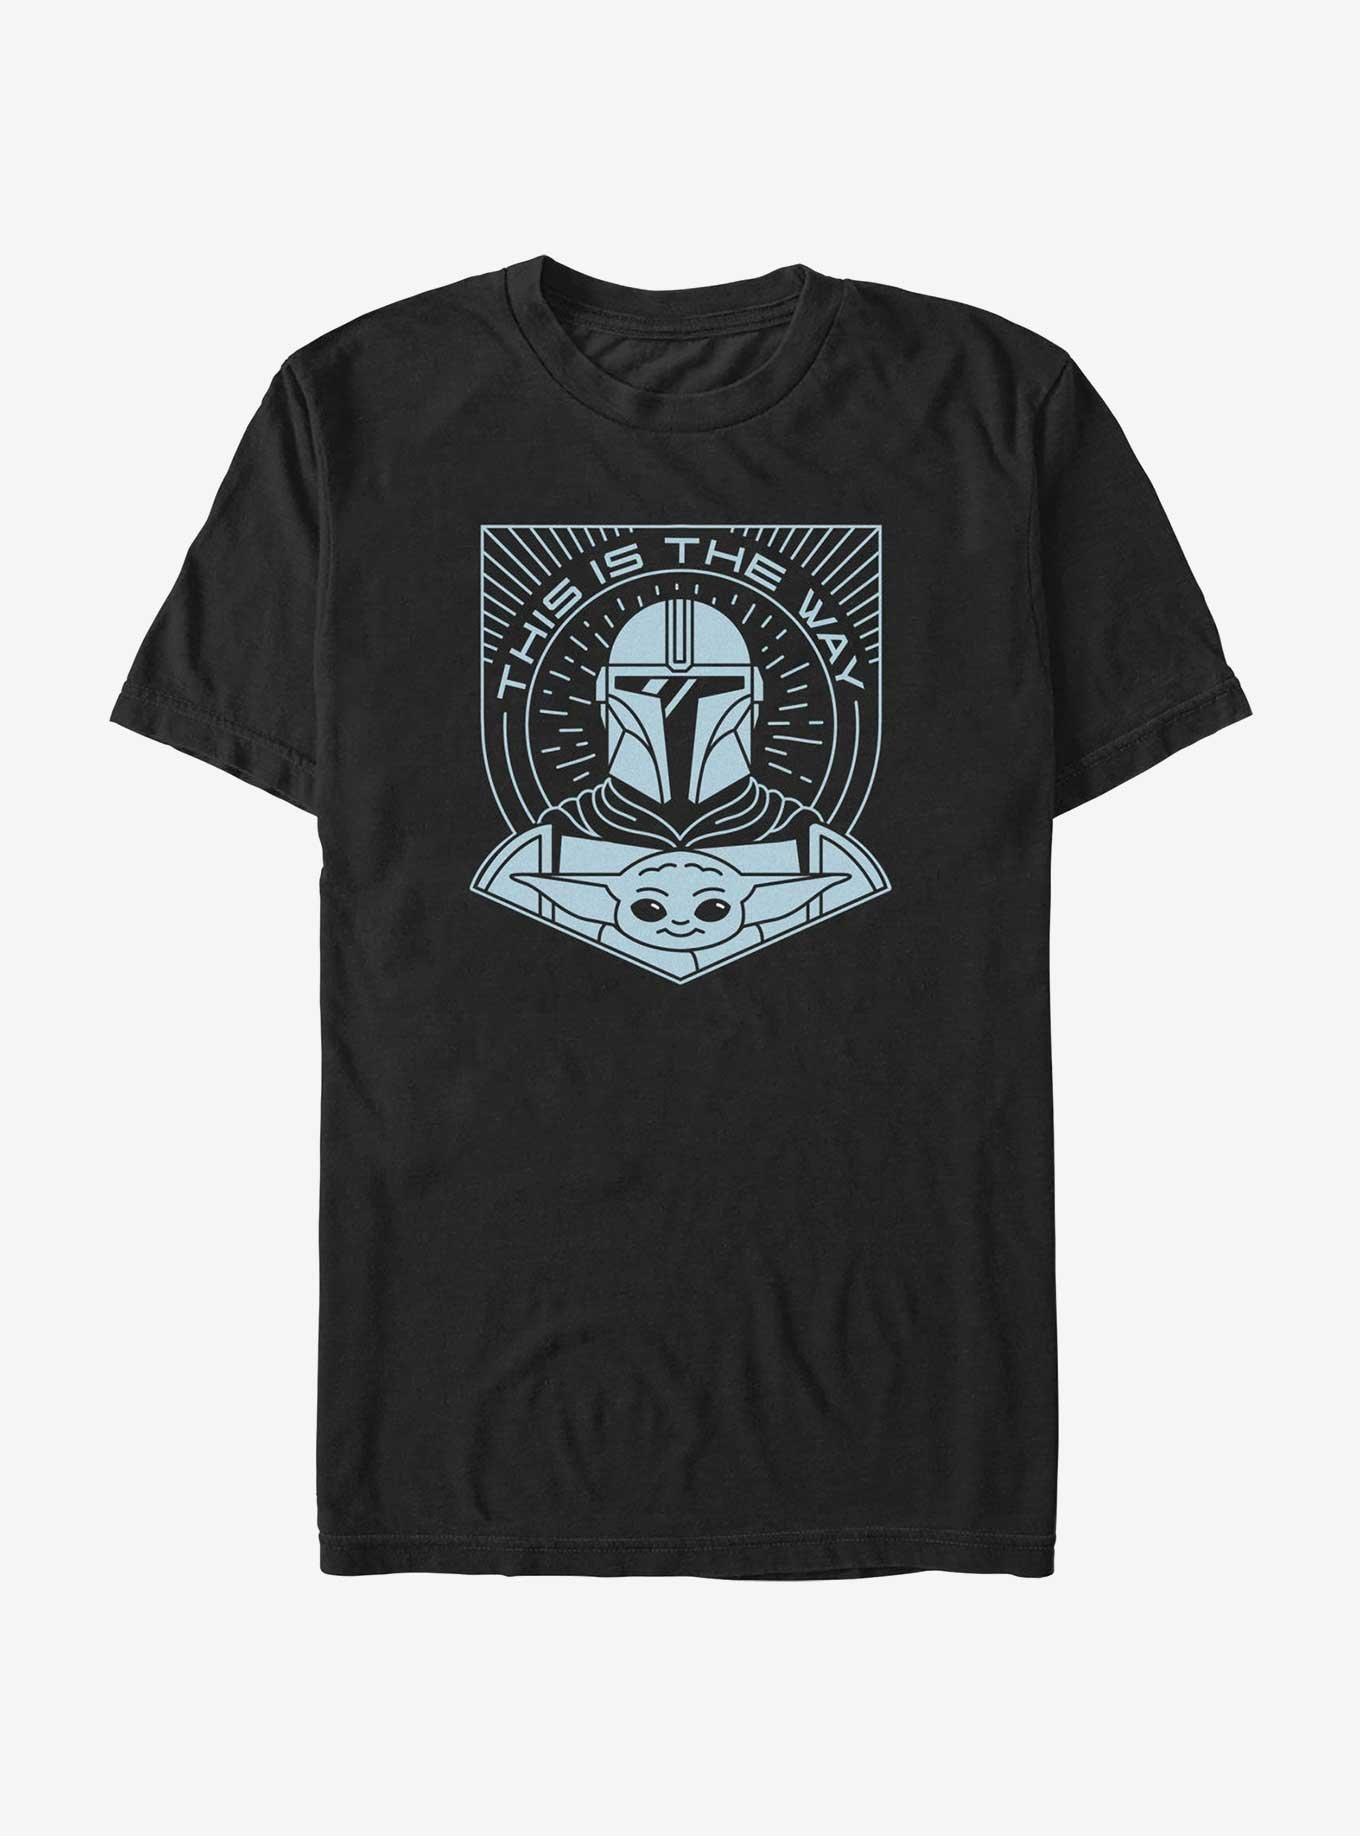 Star Wars The Mandalorian This Is Way Line Art T-Shirt